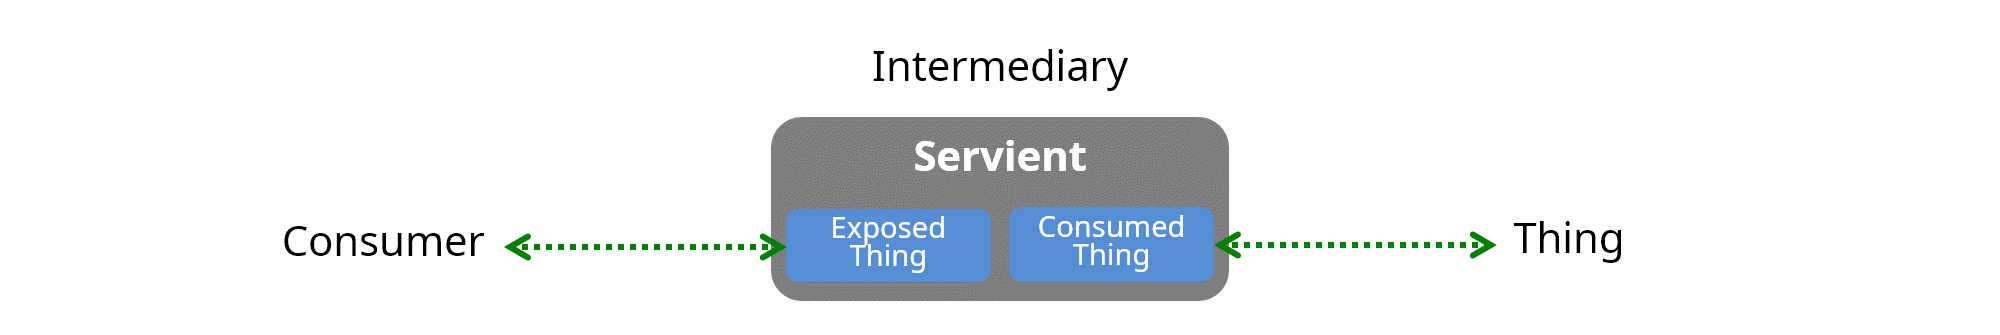 servient as an intermediary